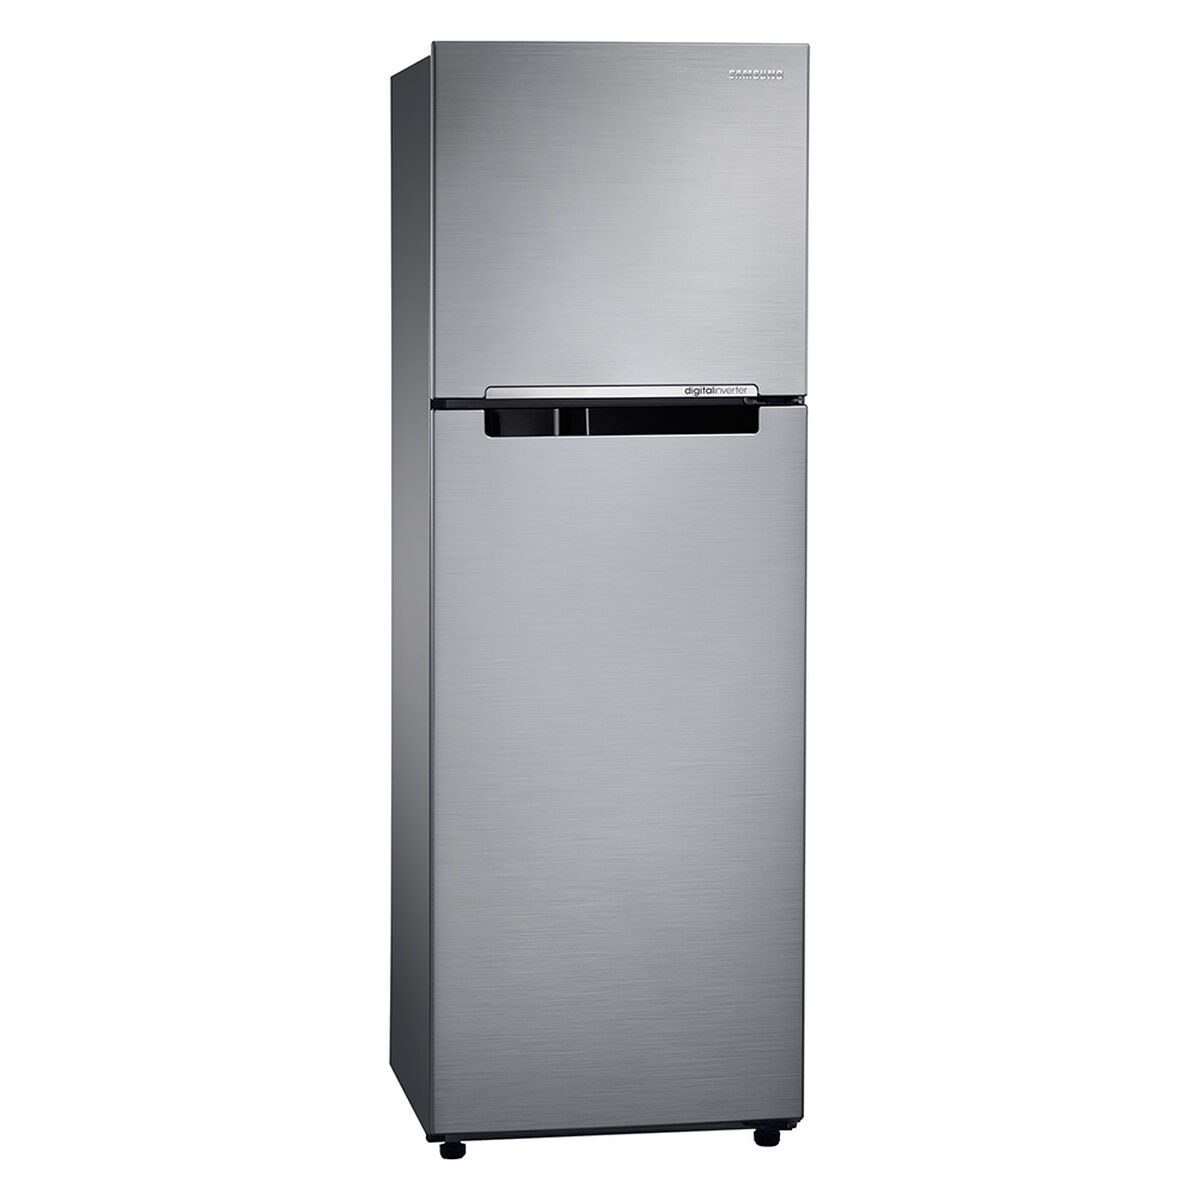 Refrigerador No Frost Samsung RT25FARADS8/ZS 255 lts.